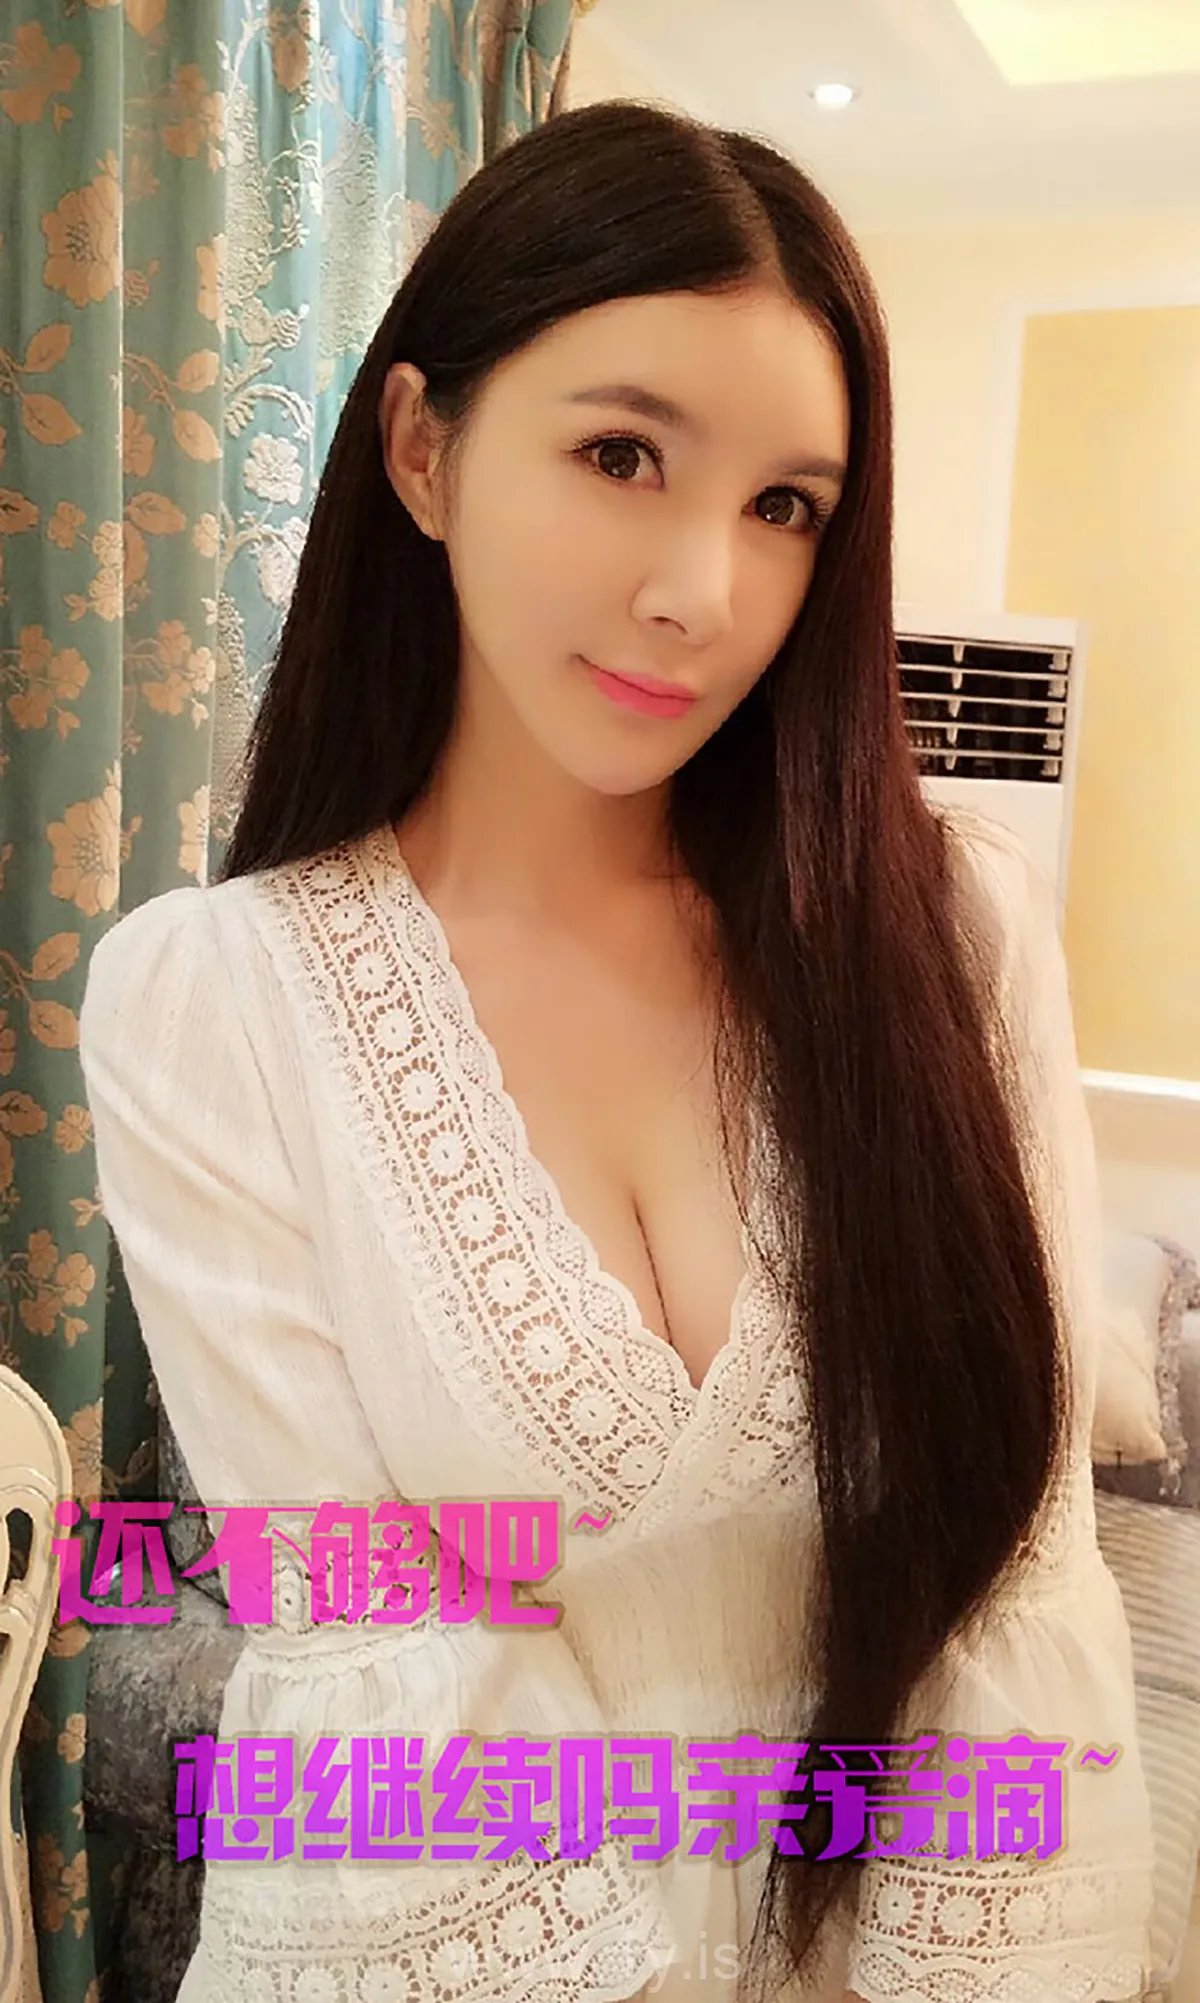 UGIRLS NO.139 Refined & Good-looking Chinese Chick 顾欣怡风吹仙飘飘举